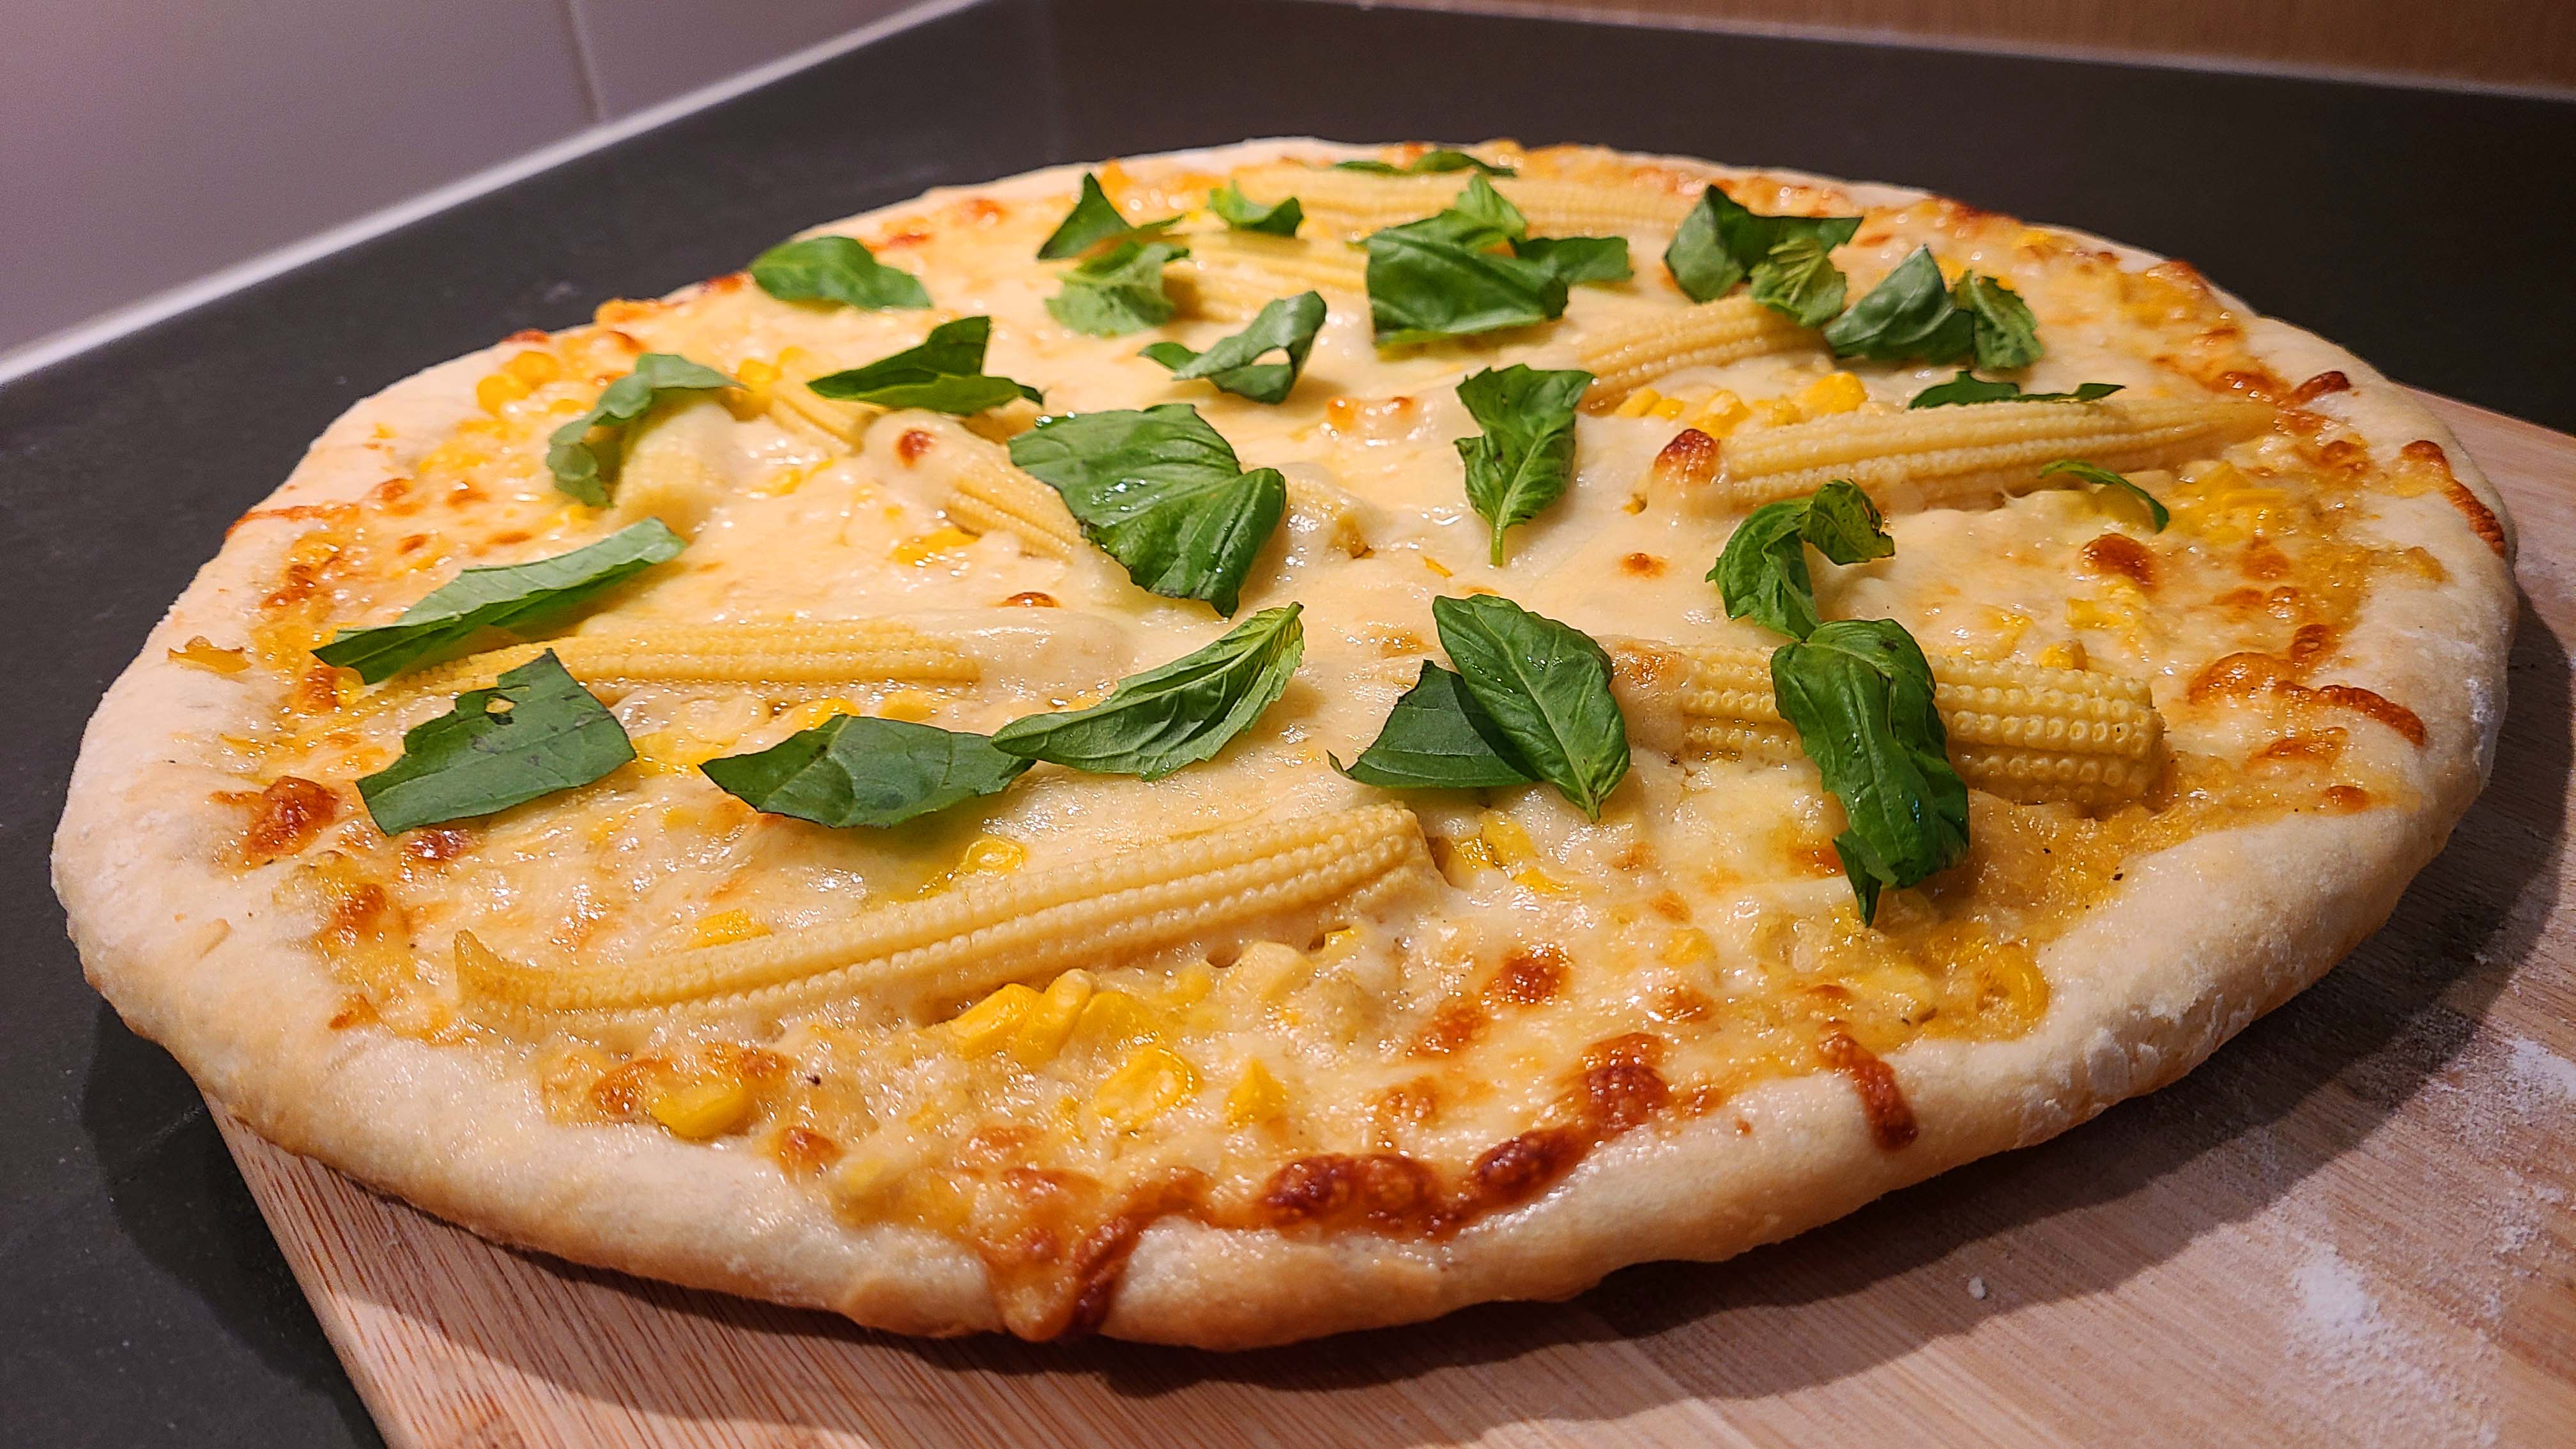 Homemade Pizza Recipes